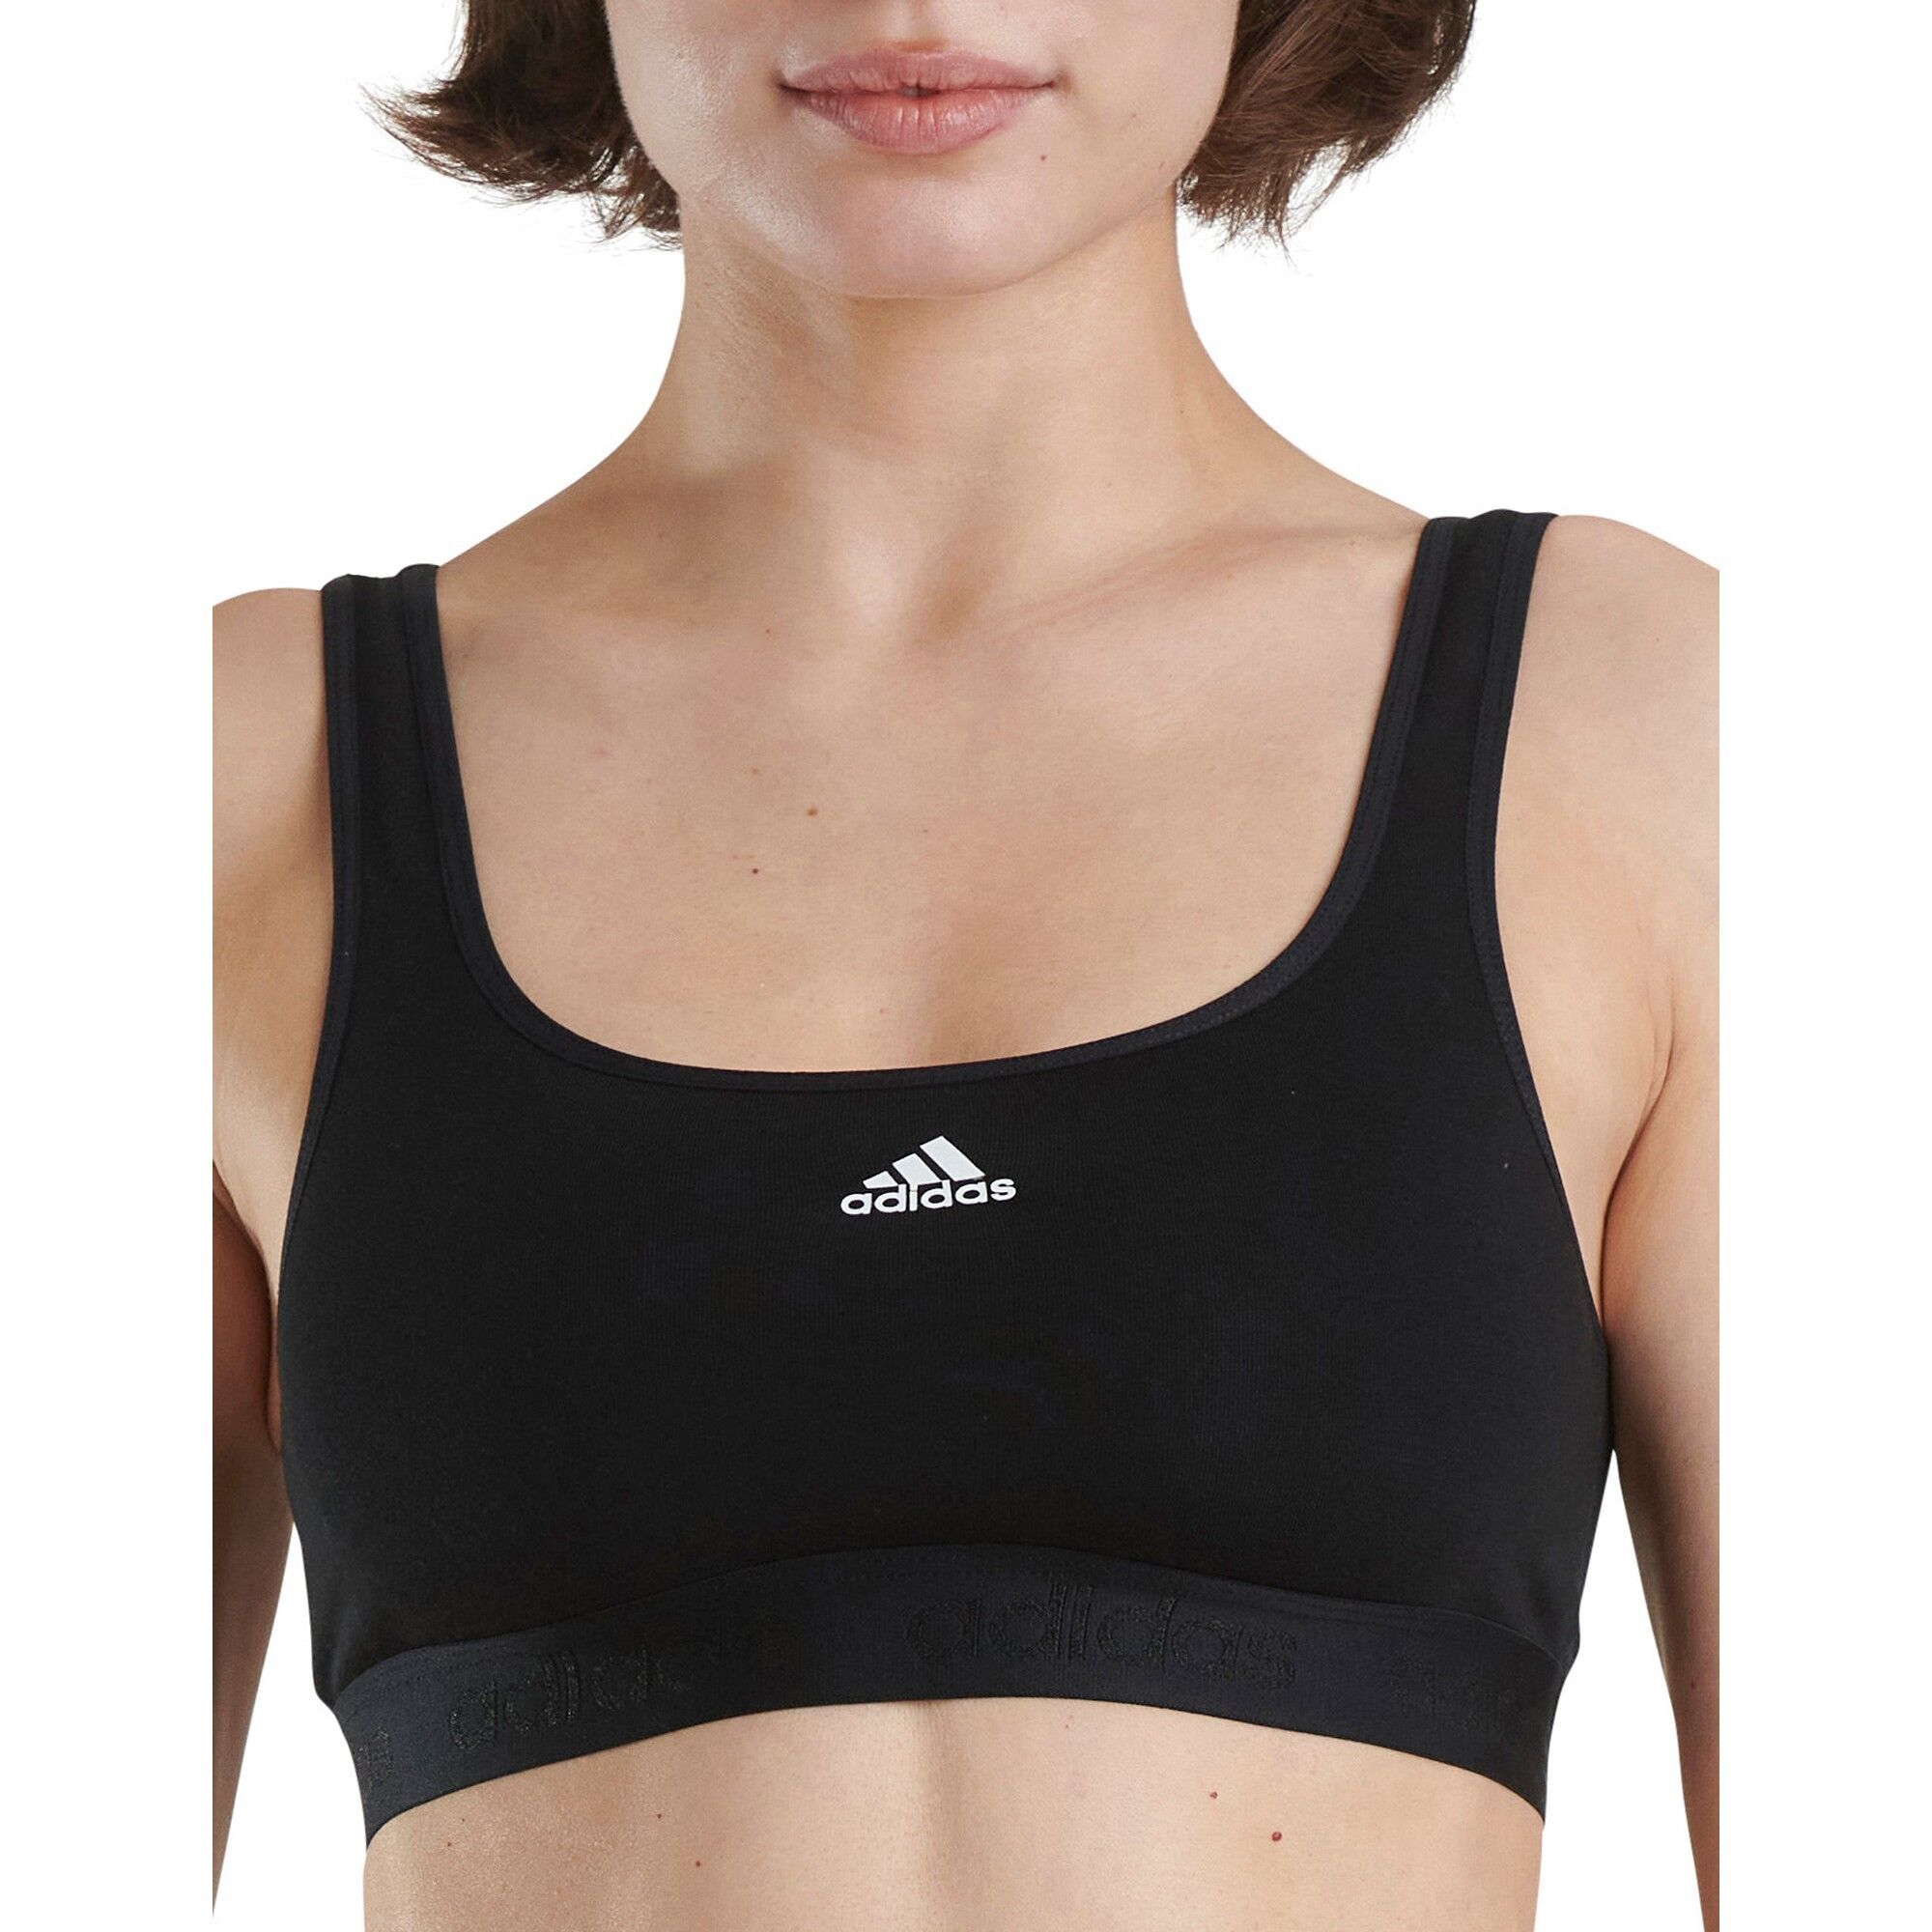 Adidas Brassie?re Micro Free Cut sans armatures - Adidas  - Noir - Size: 115E - Woman